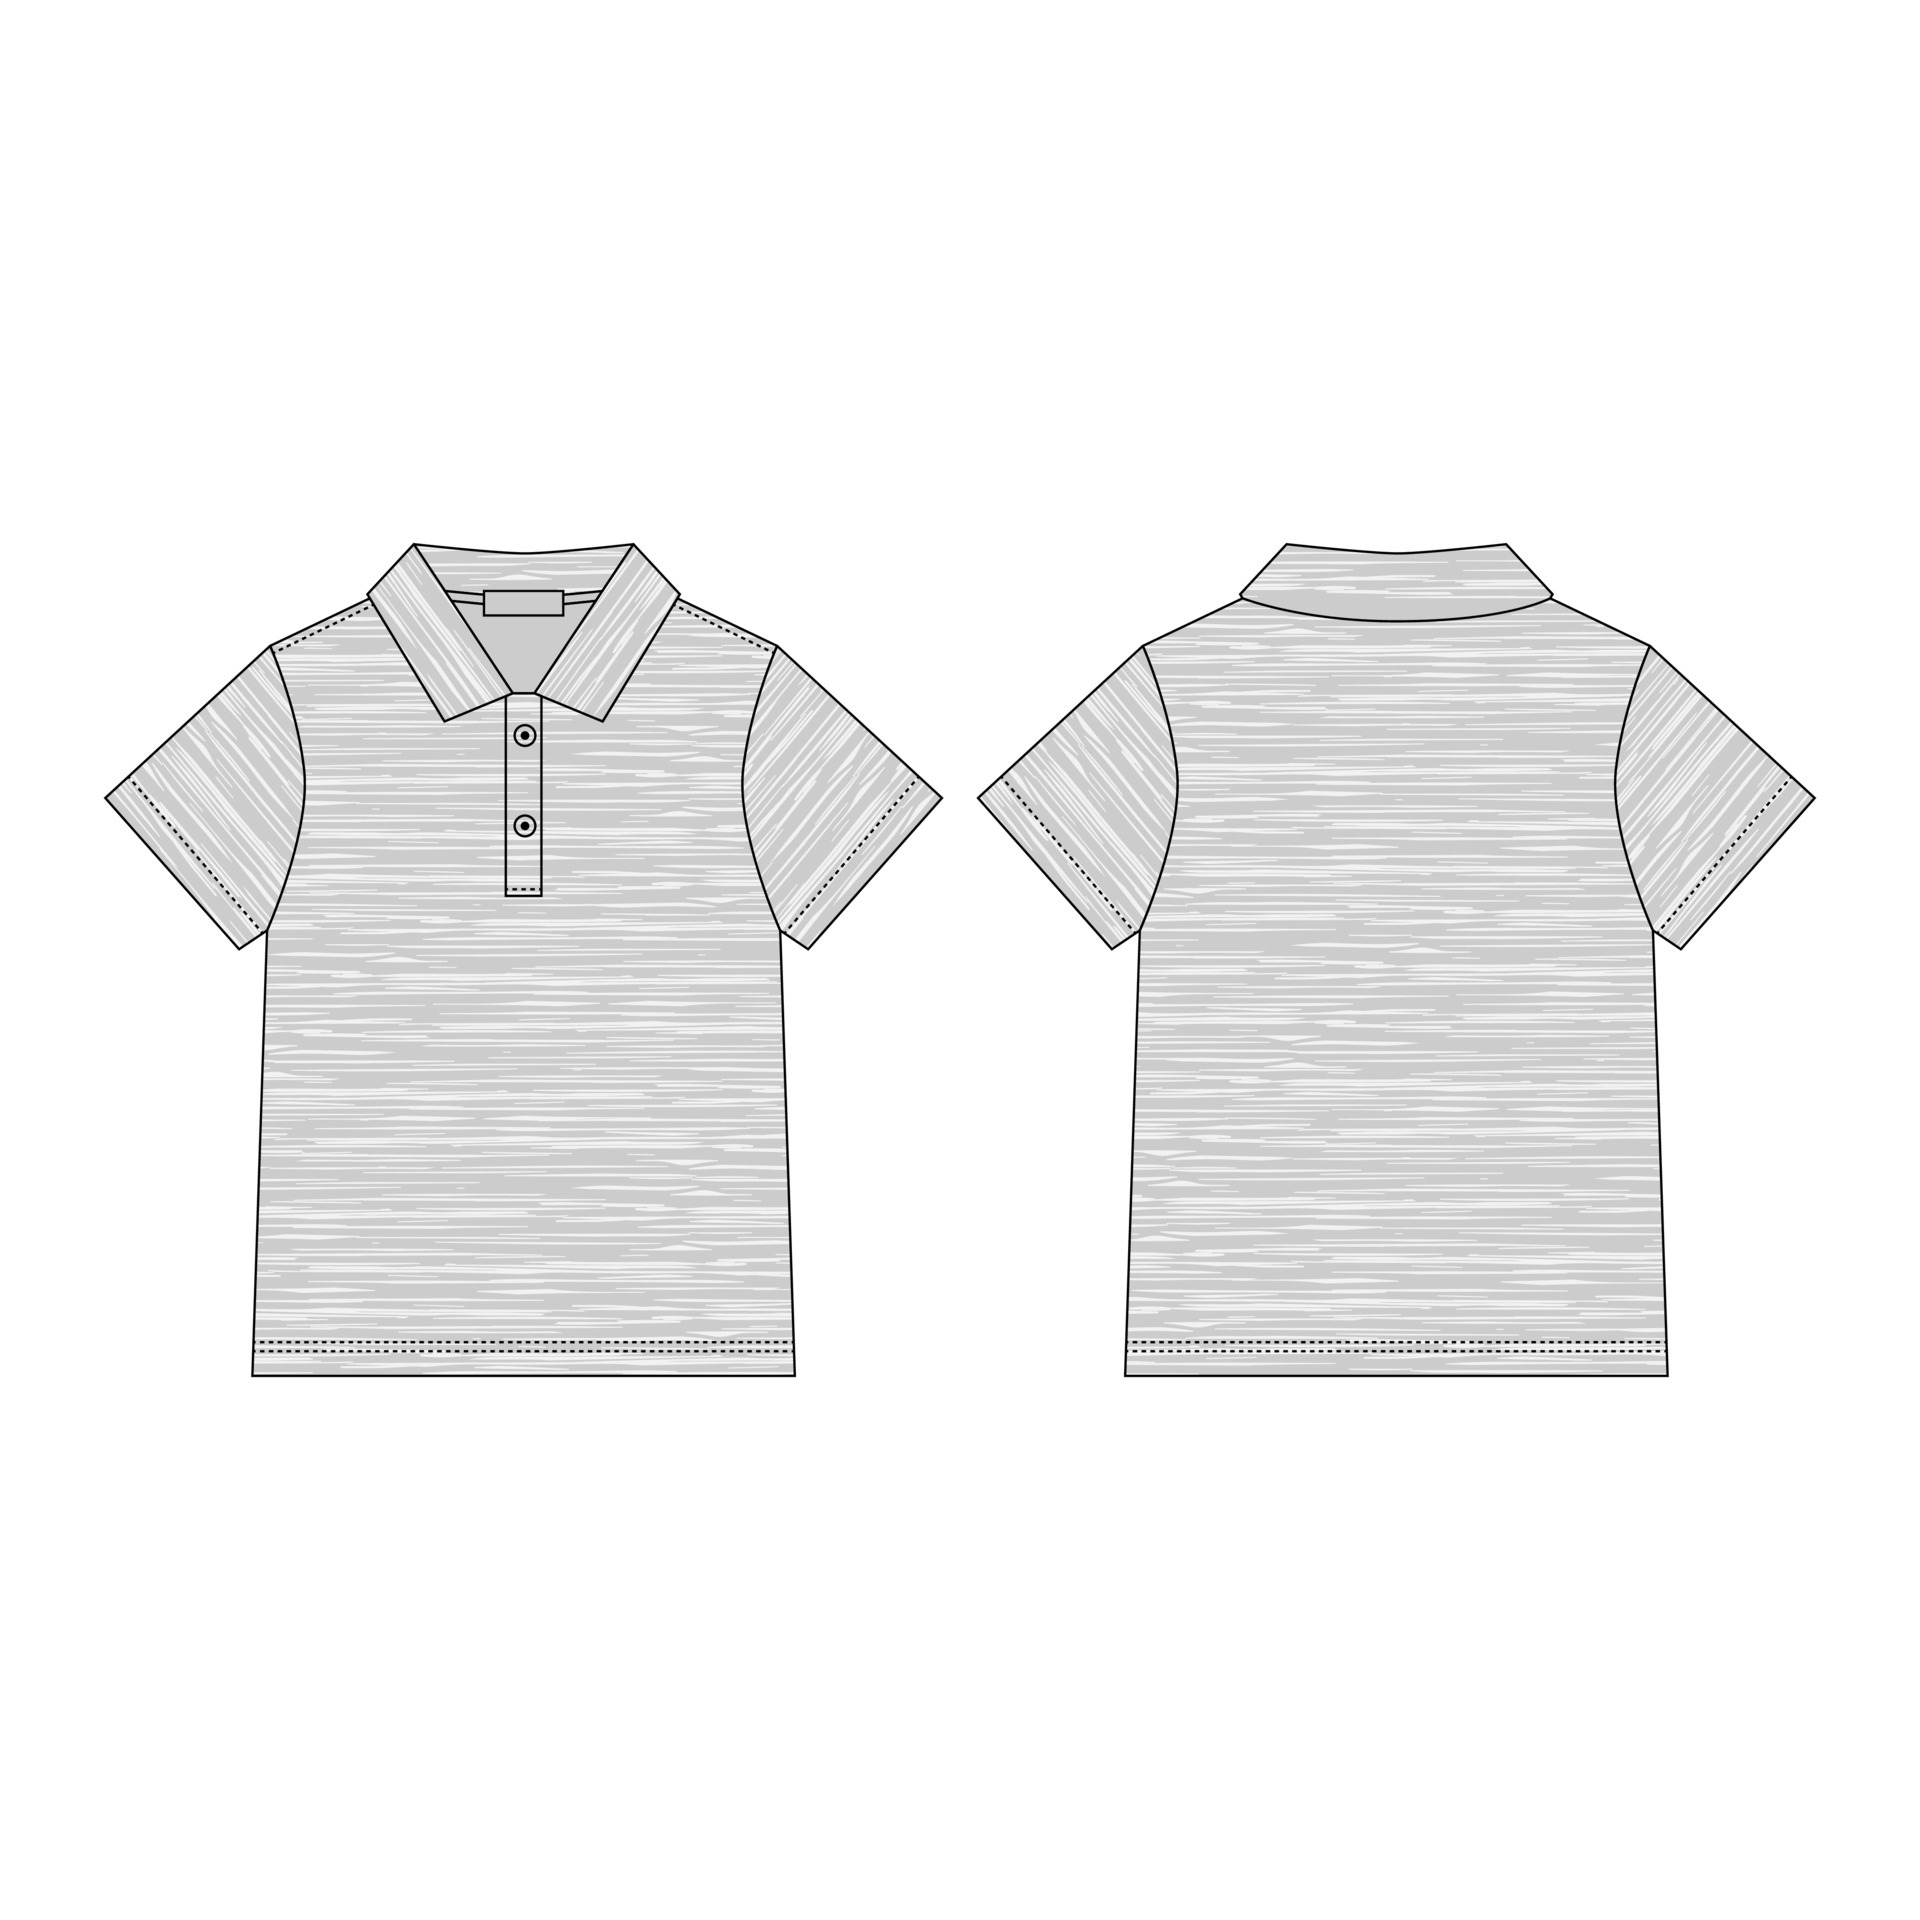 Short sleeve raglan polo Shirt Technical Fashion flat sketch Vector  illustration template front and back views. 7558017 Vector Art at Vecteezy